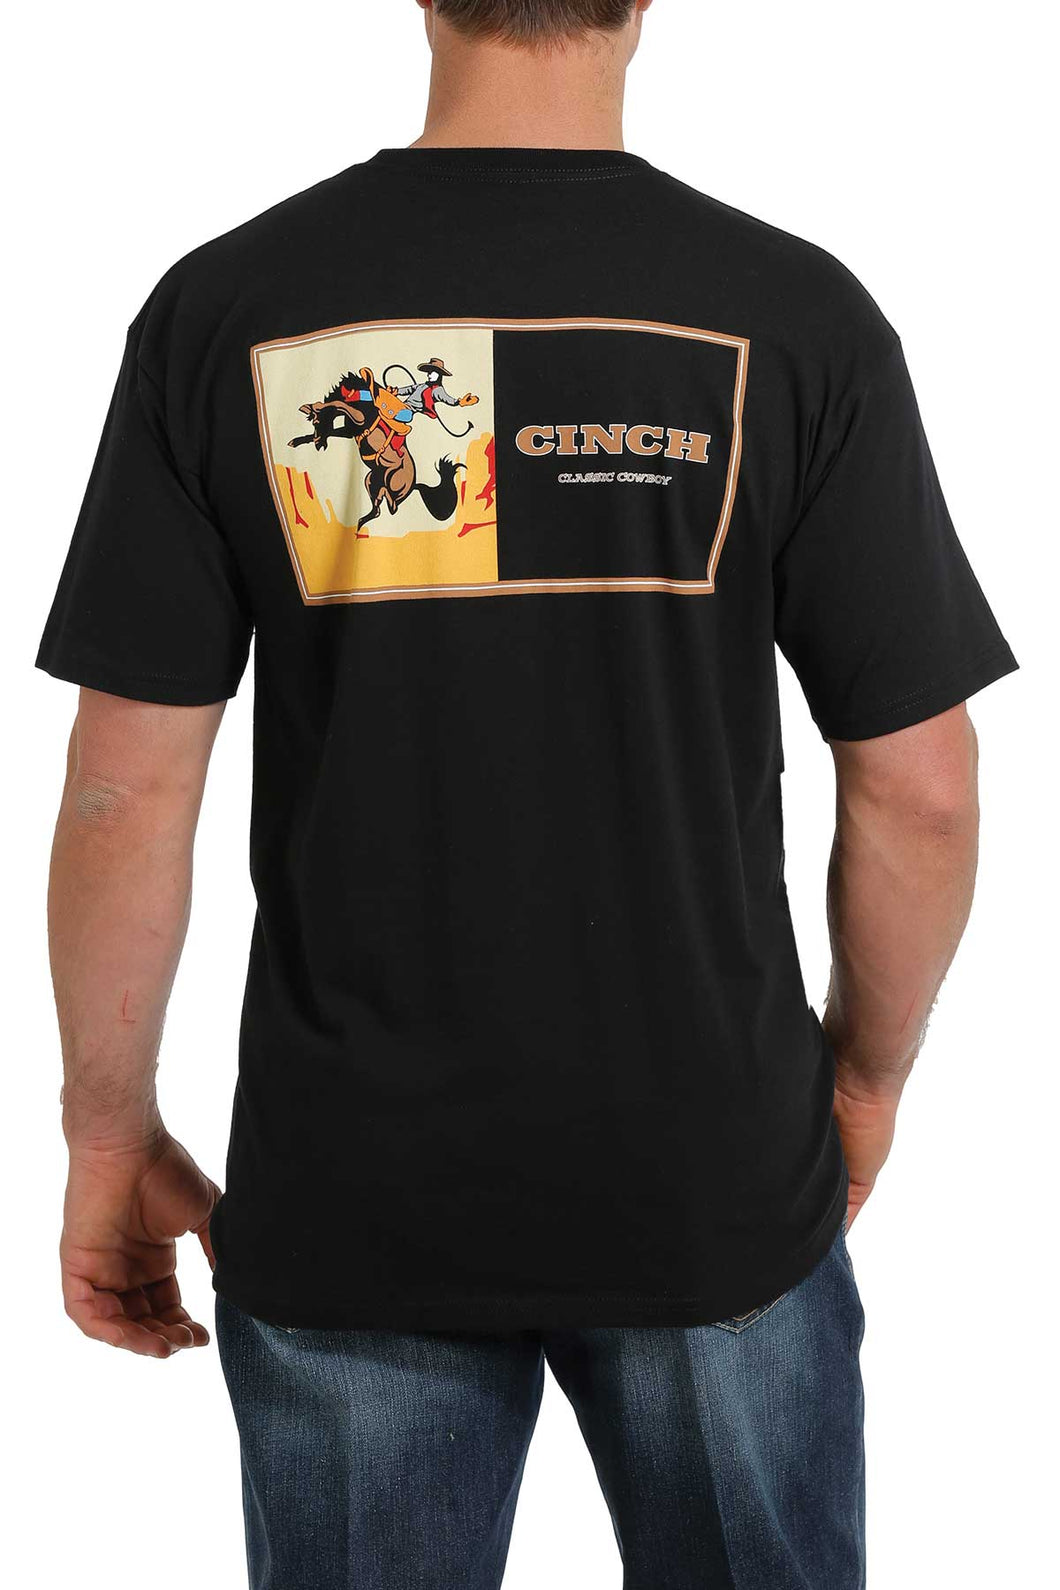 Cinch Men's Short Sleeve Graphic Logo Black T-Shirt